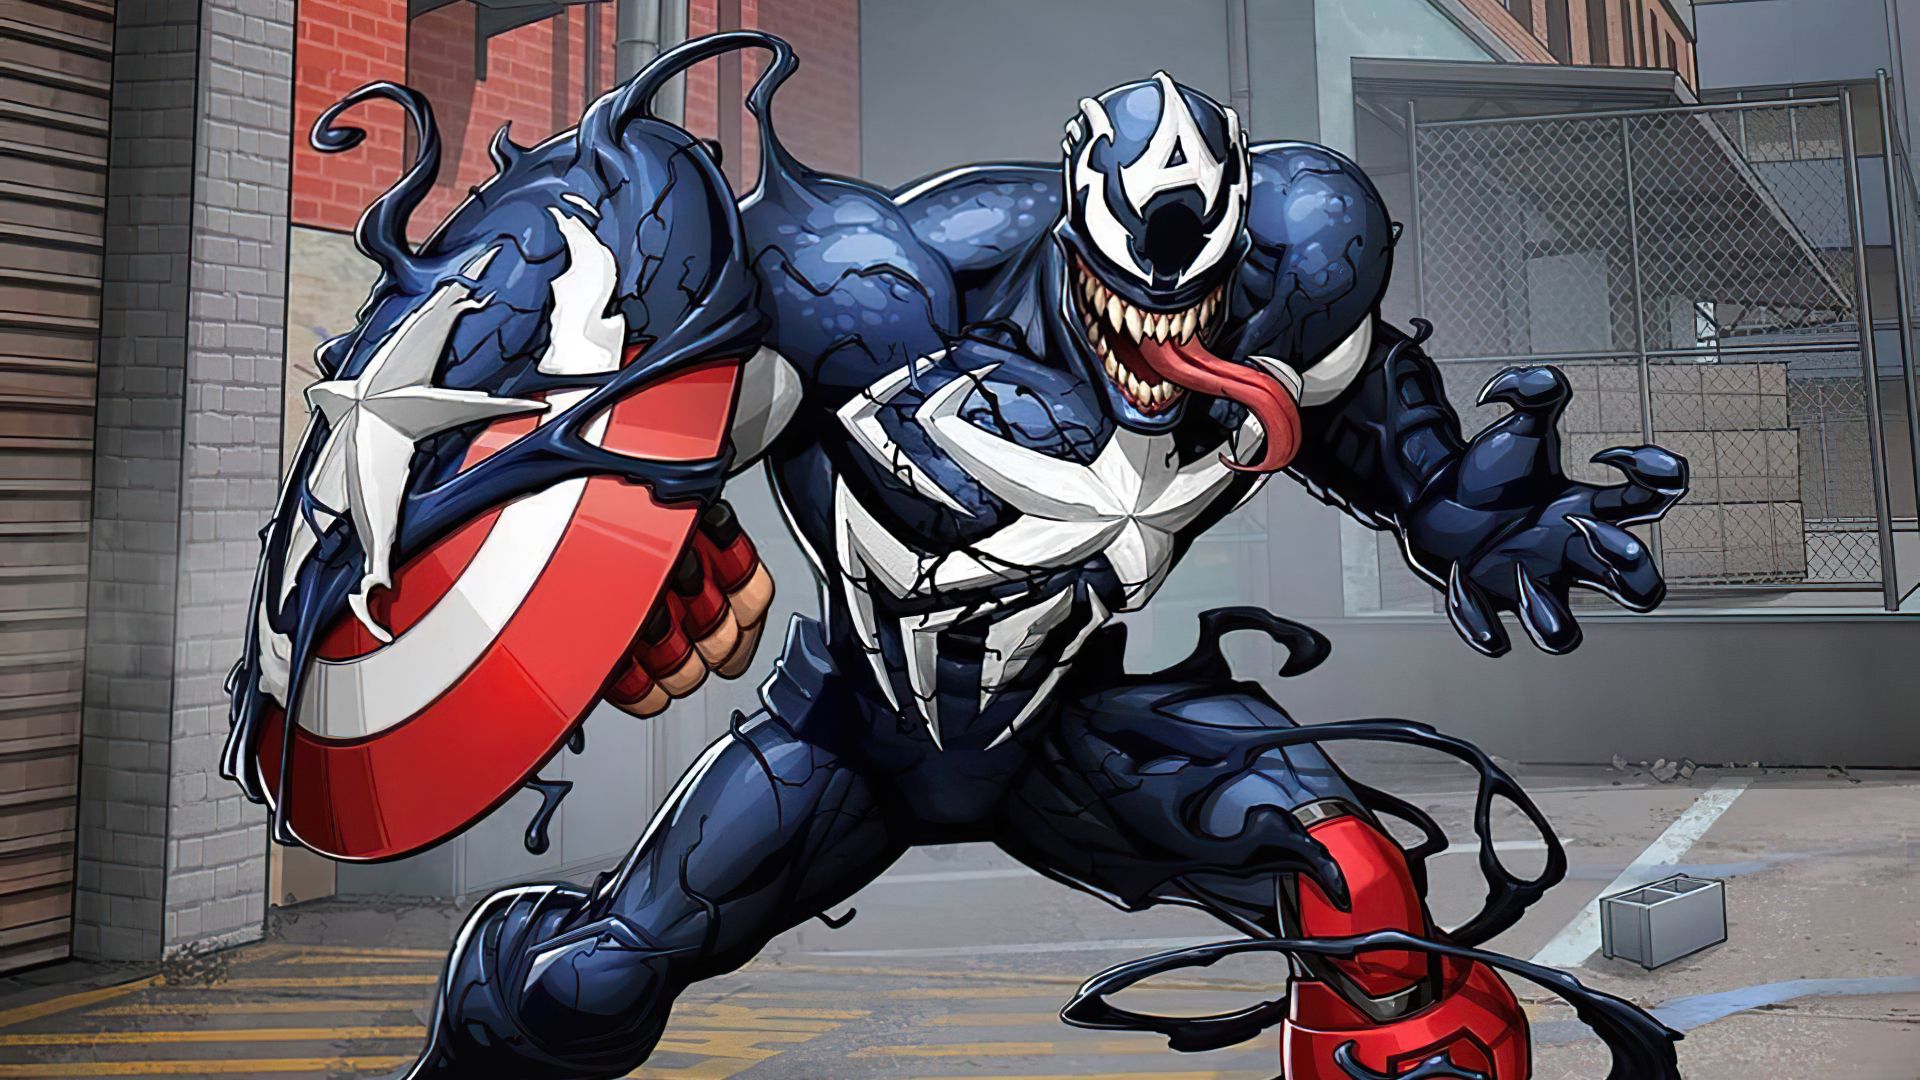 Captain America x Venom Macbook Pro Retina Wallpaper, HD Superheroes 4K Wallpaper, Image, Photo and Background